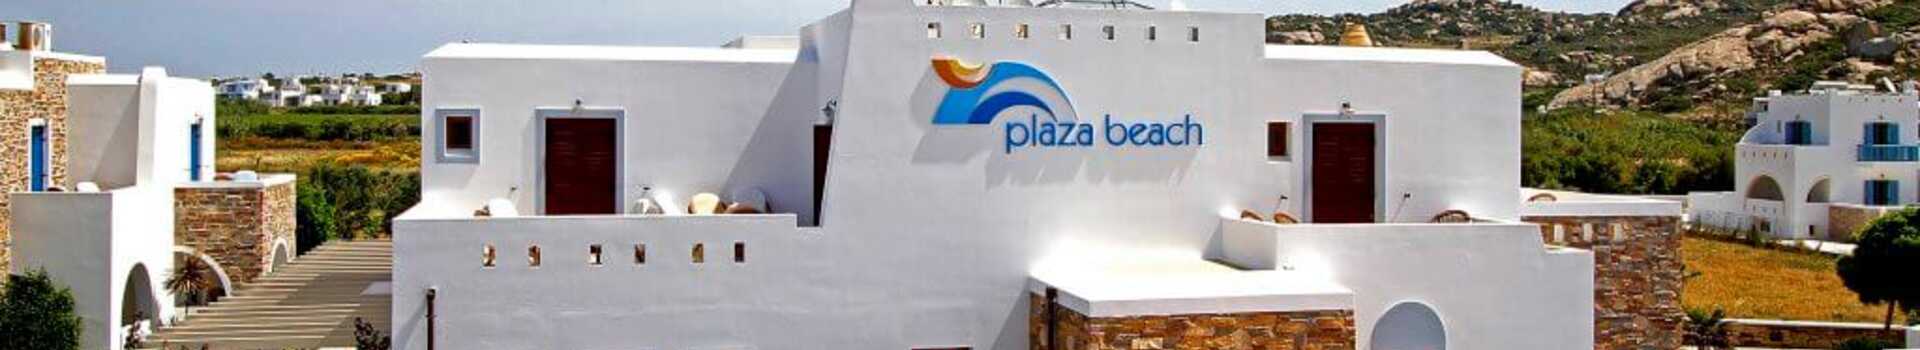 Plaza Beach, Naxos17